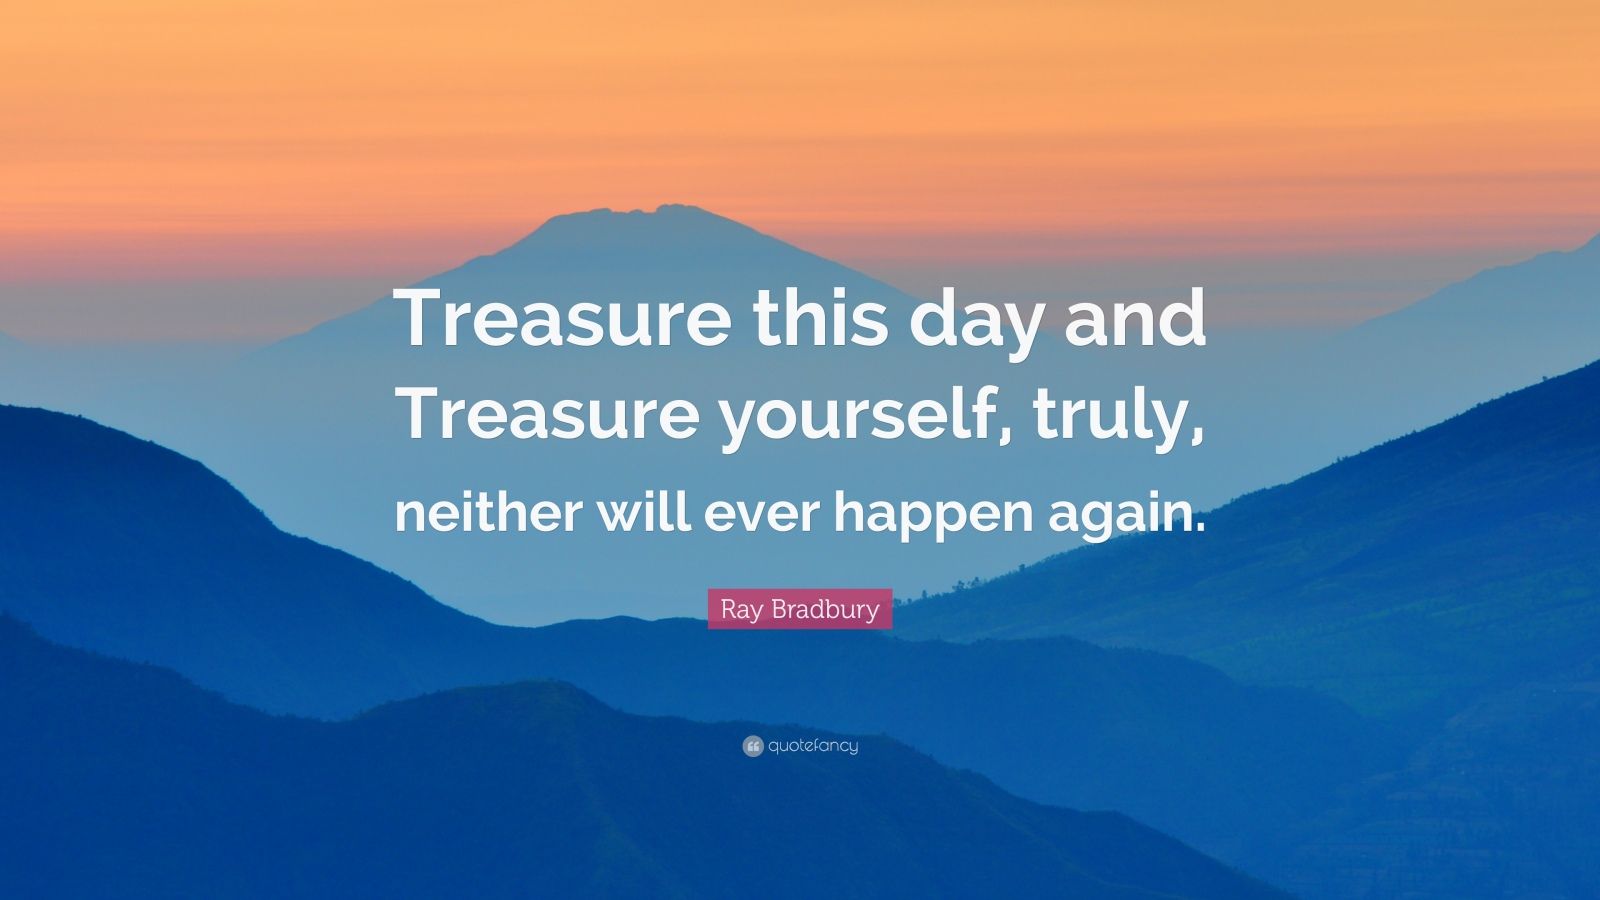 Ray Bradbury Quote: “Treasure this day and Treasure yourself, truly